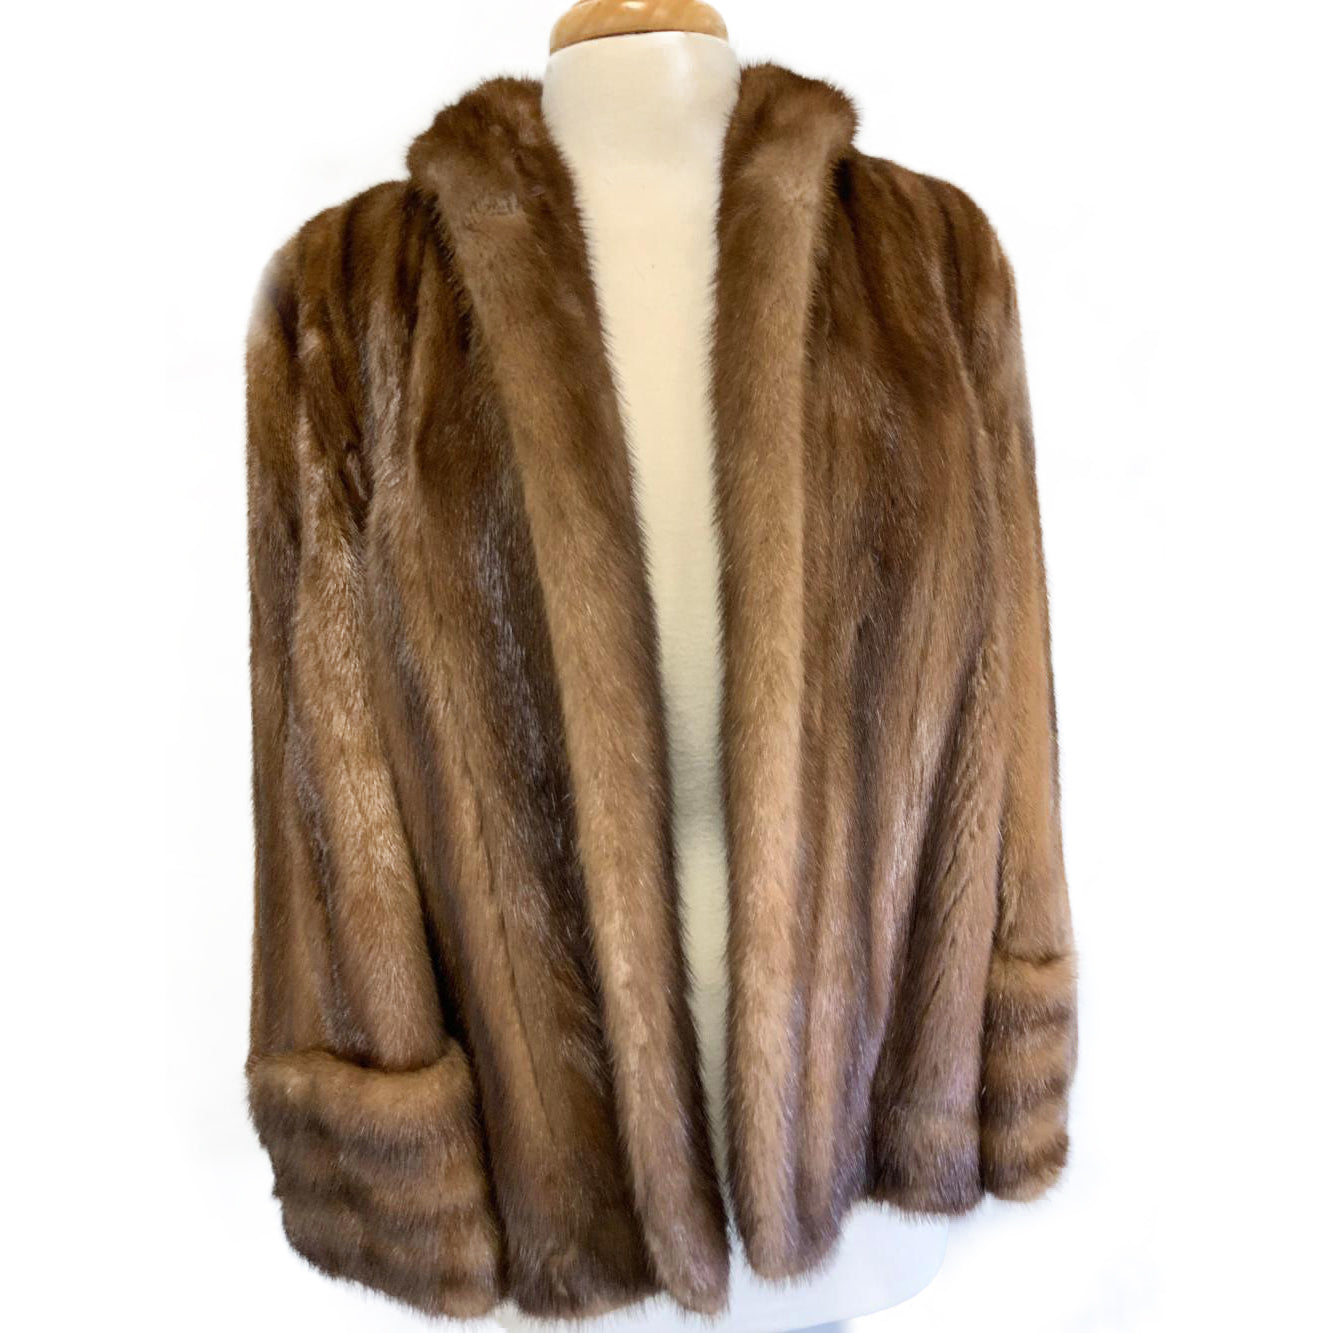 Custom-Made Luxury Brown Fur Jacket and Cape in One -  Medium